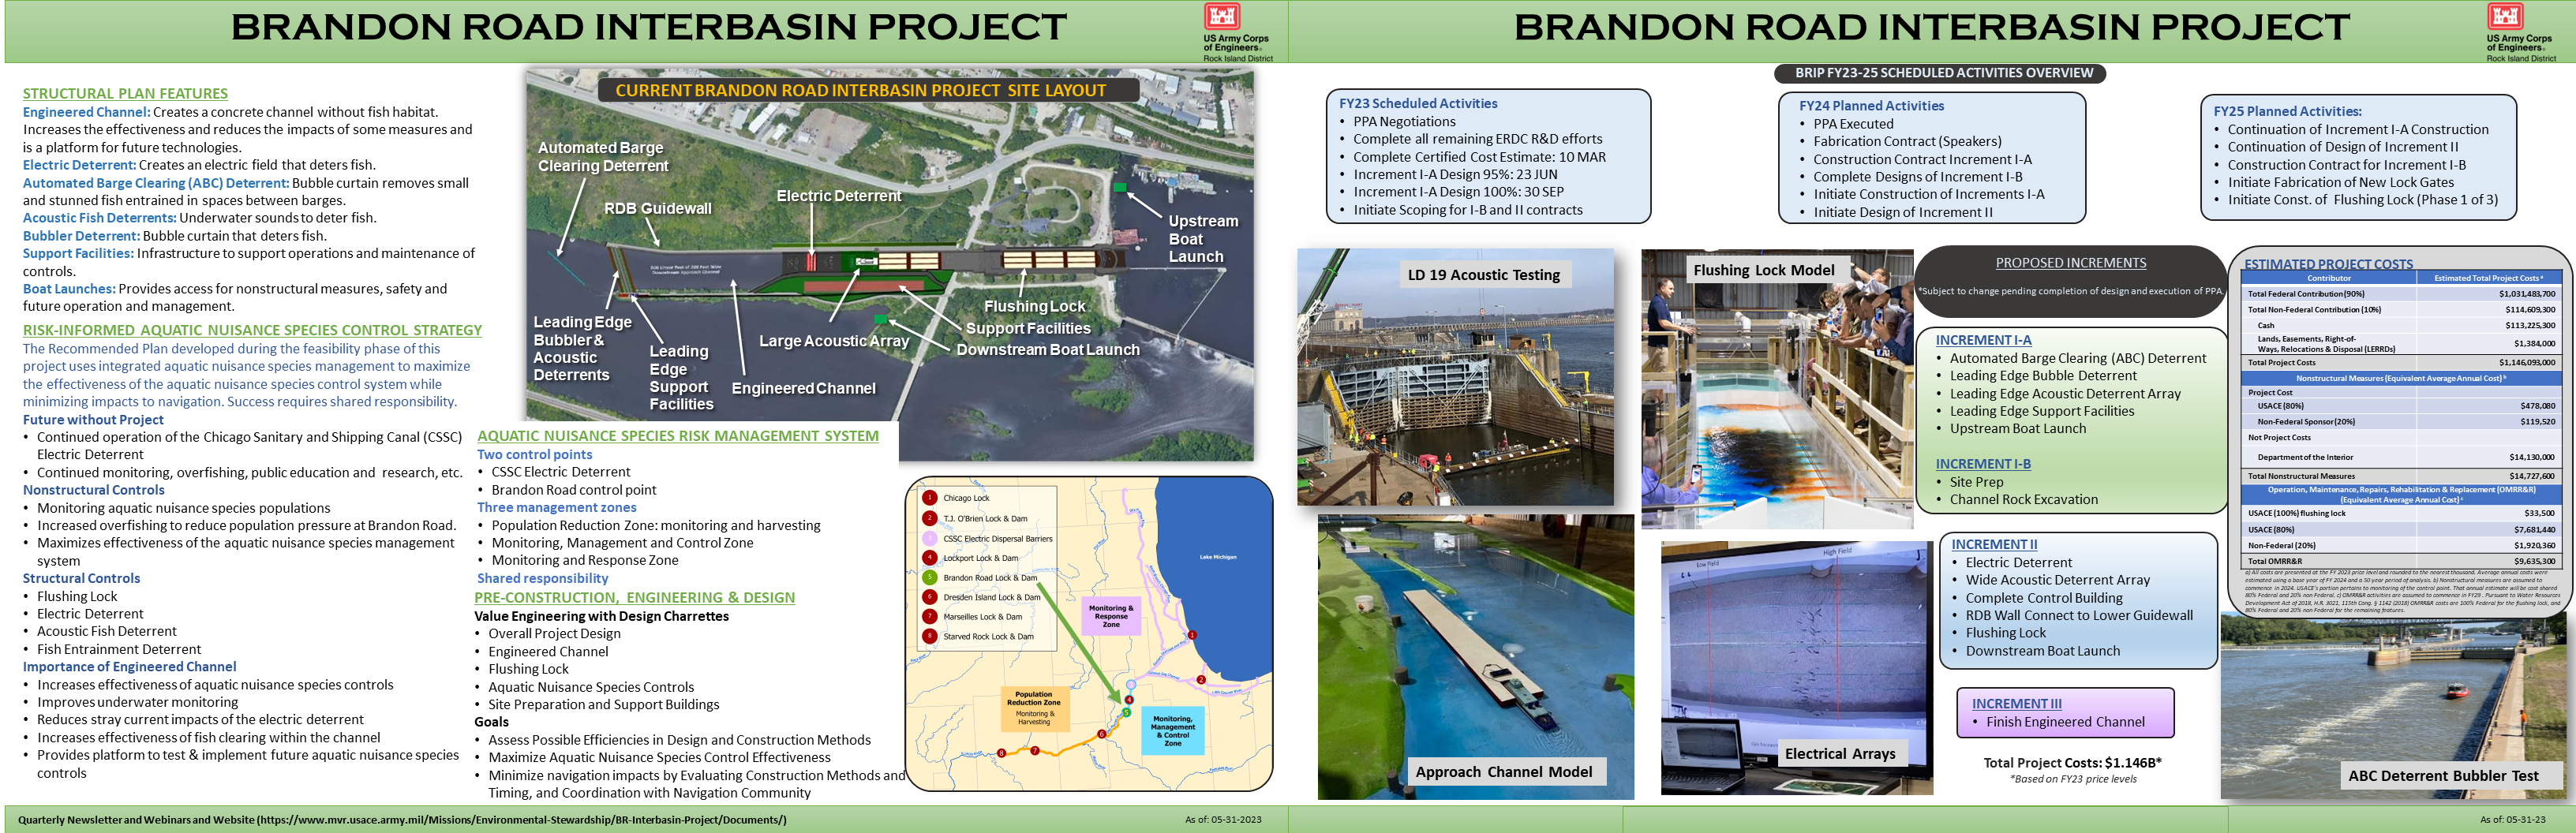 Brandon Road Interbasin Project Overview